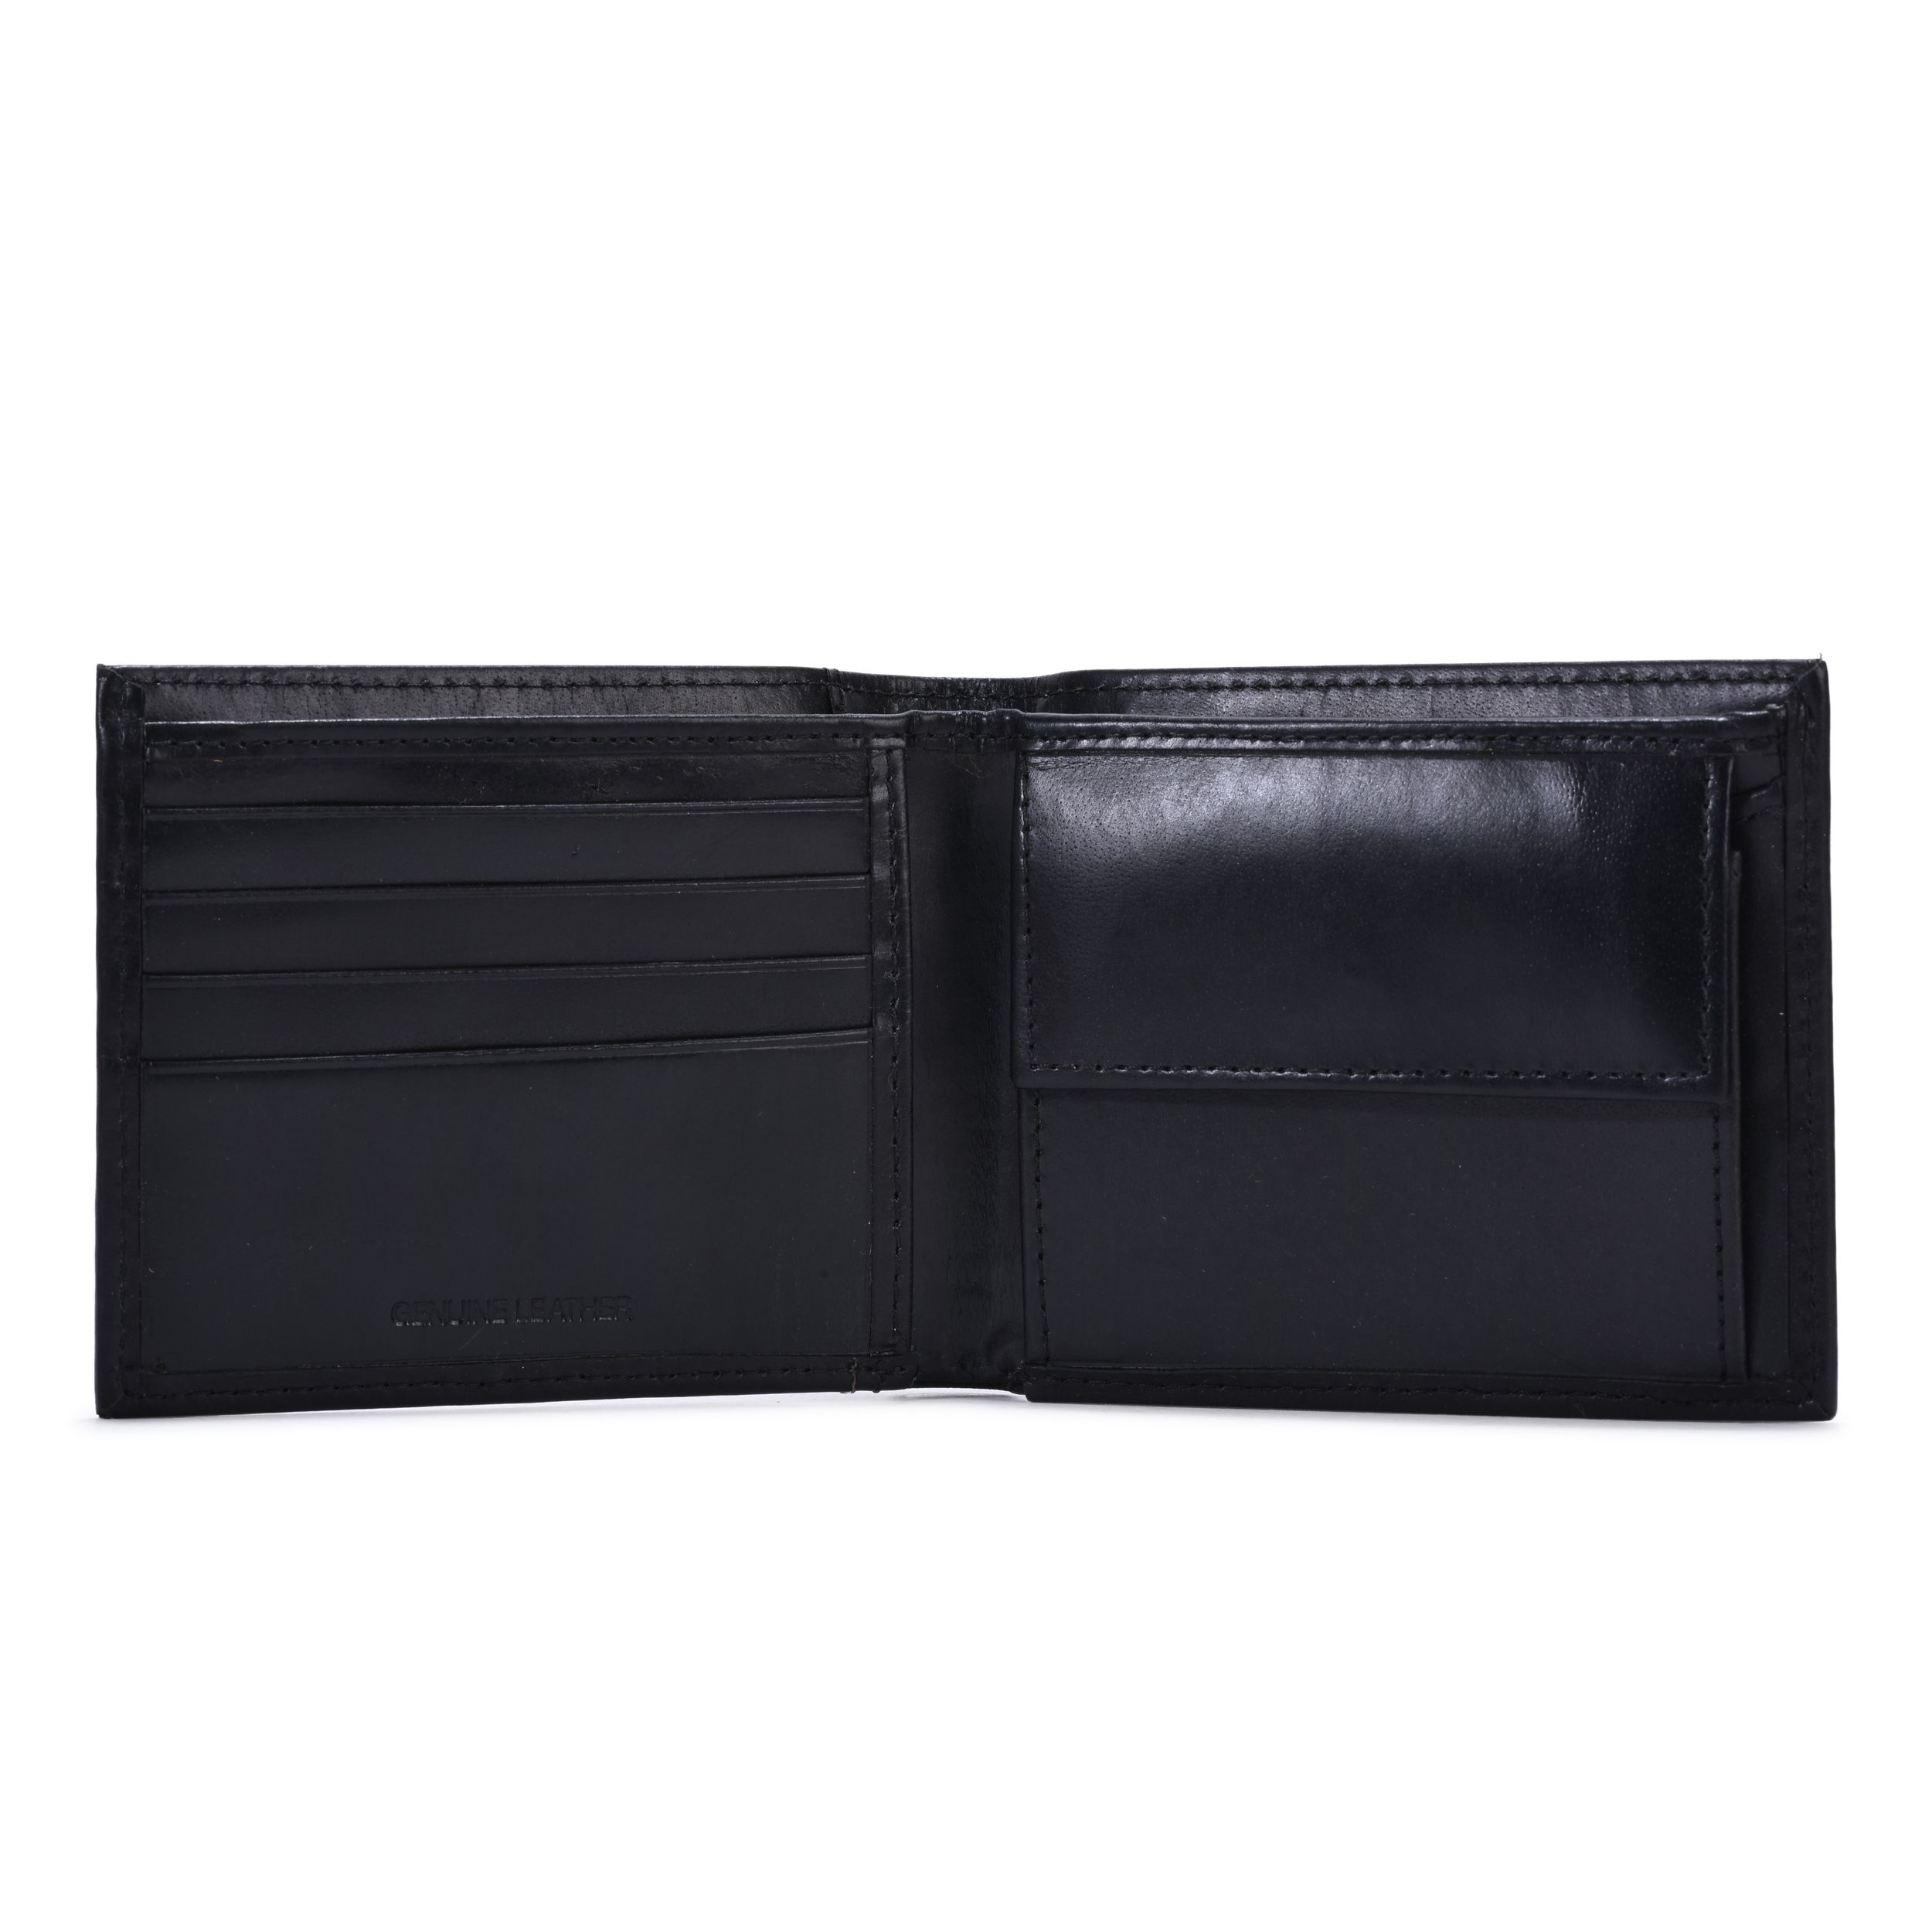 BLACK Leather Wallet